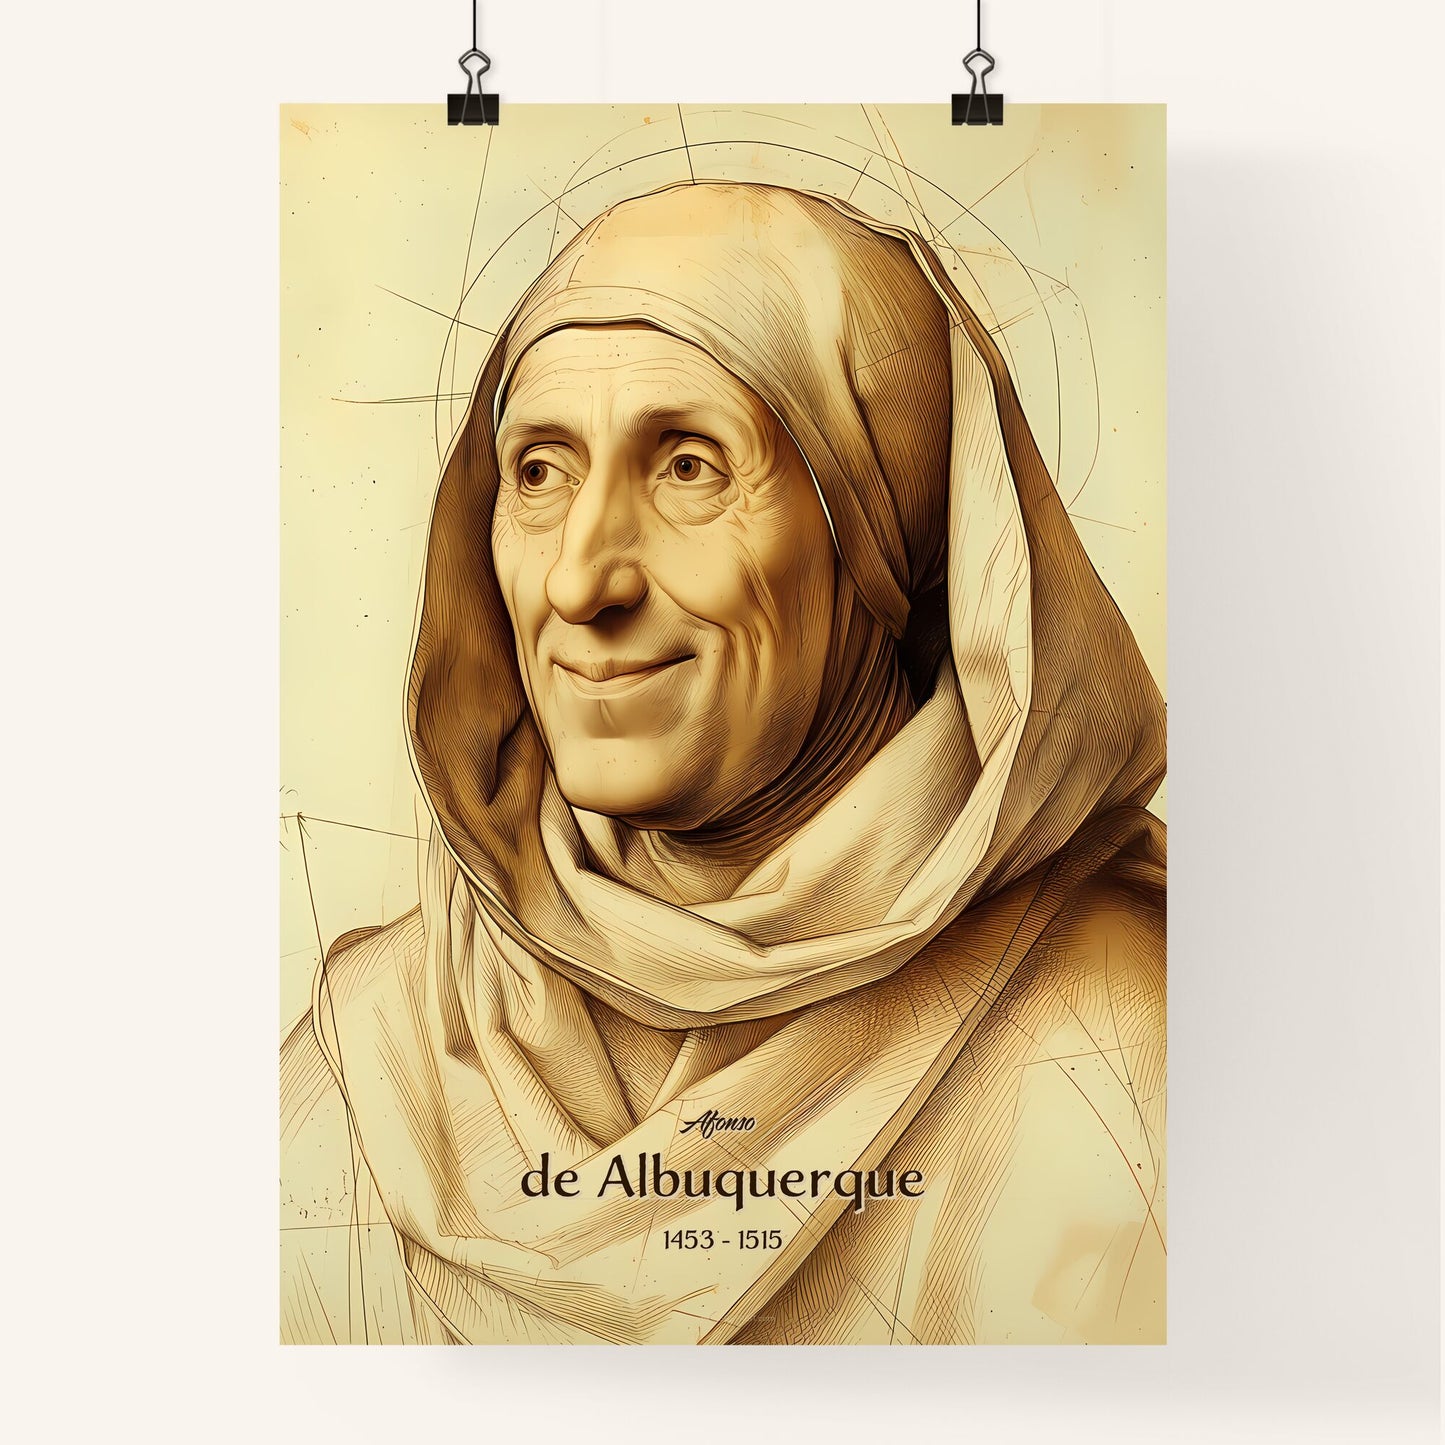 Afonso, de Albuquerque, 1453 - 1515, A Poster of a woman wearing a head scarf Default Title